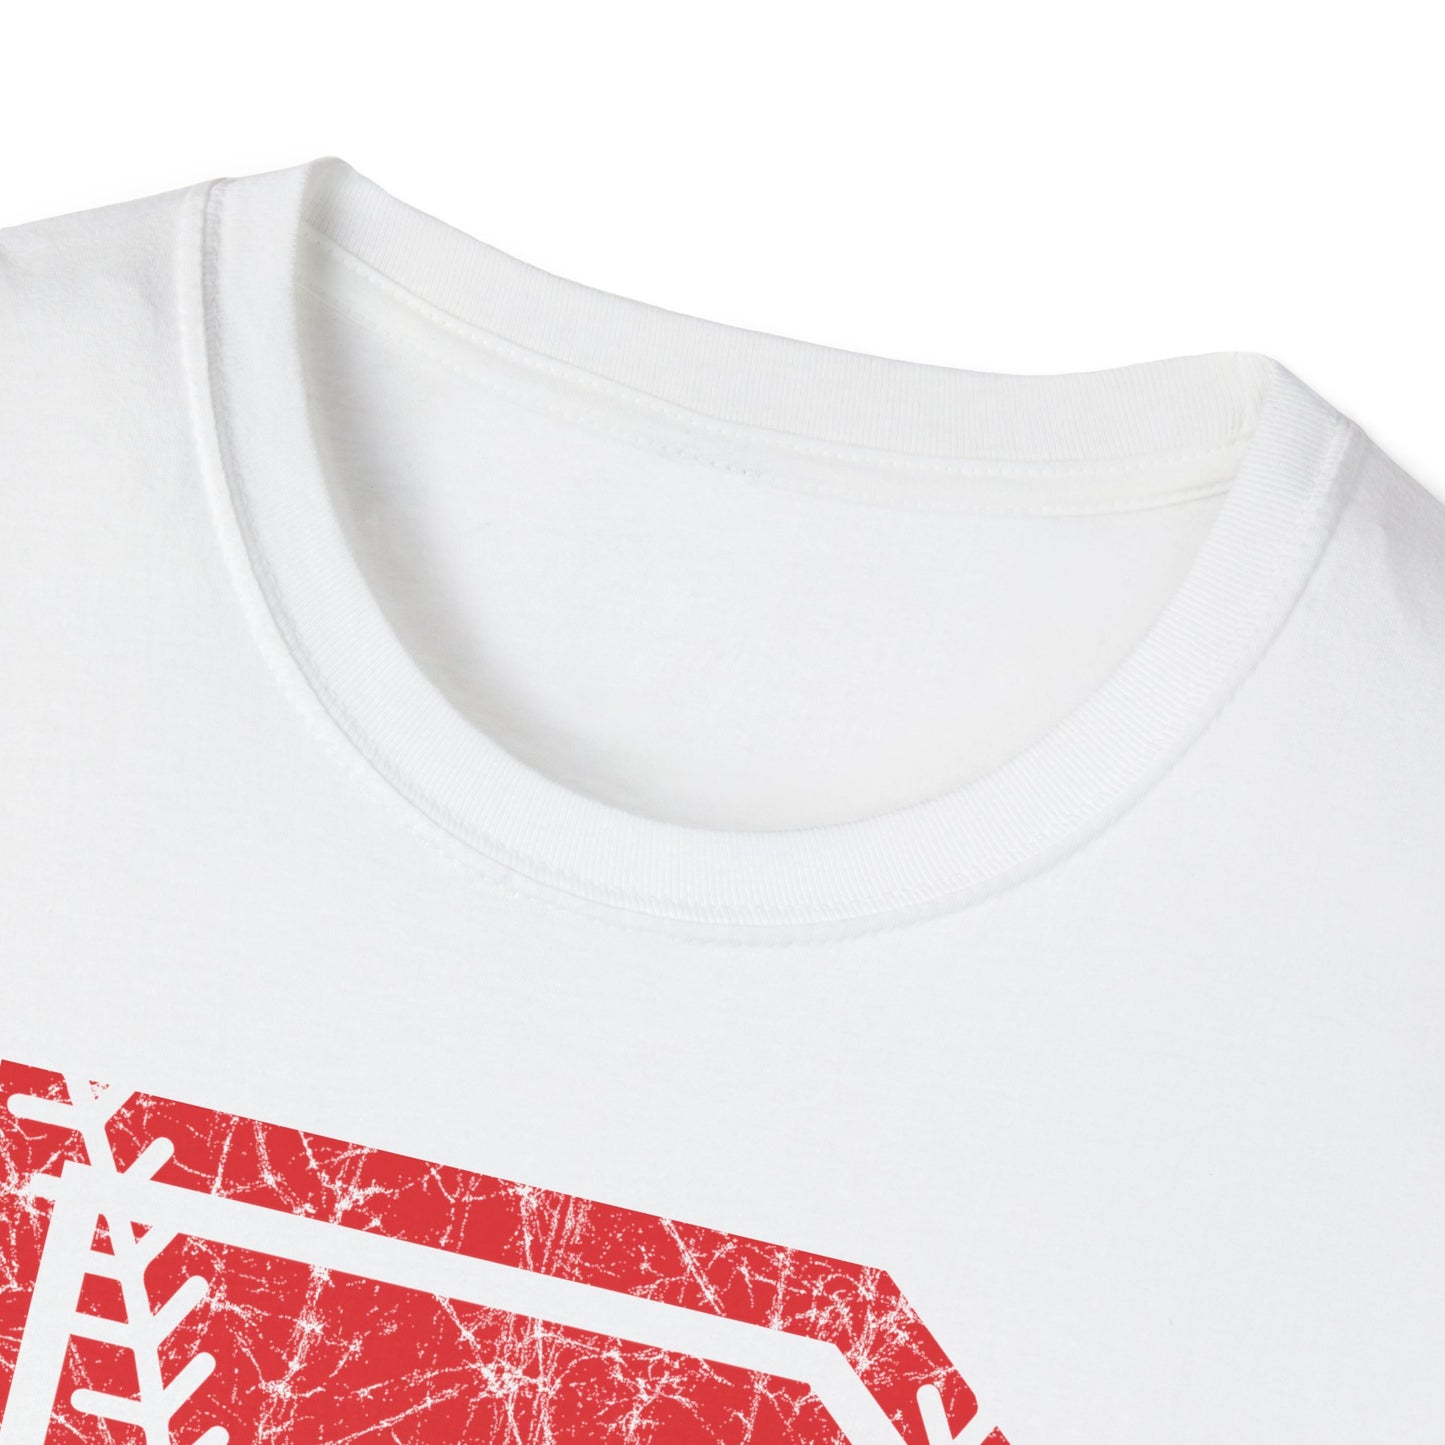 Braves Baseball Distressed B Unisex Softstyle T-Shirt